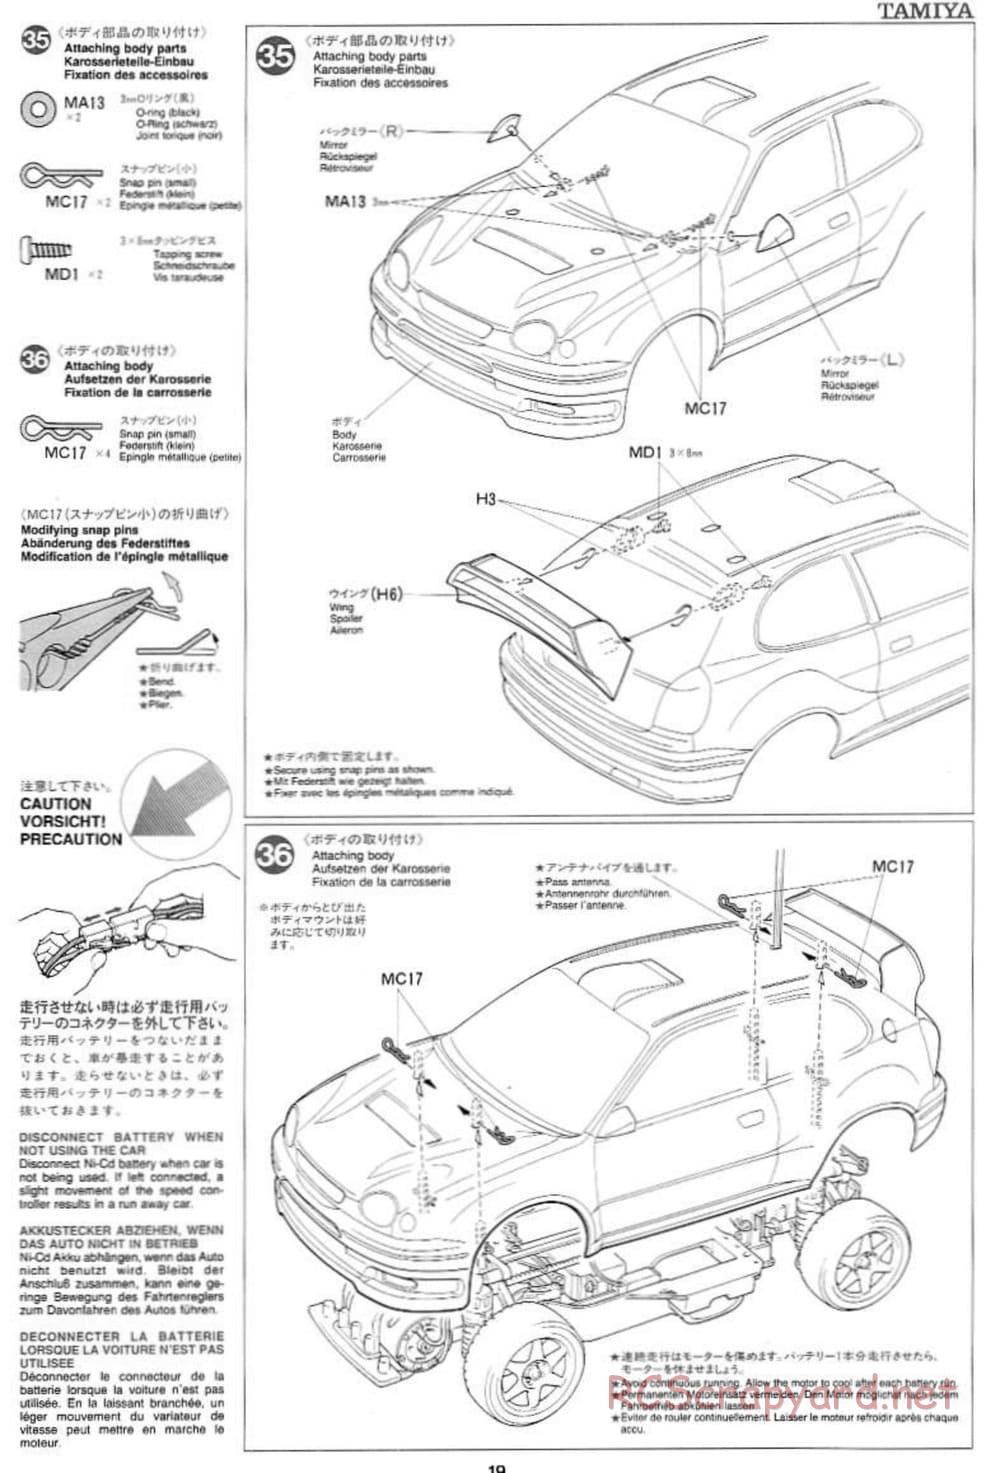 Tamiya - Toyota Corolla WRC - TA-03FS Chassis - Manual - Page 19